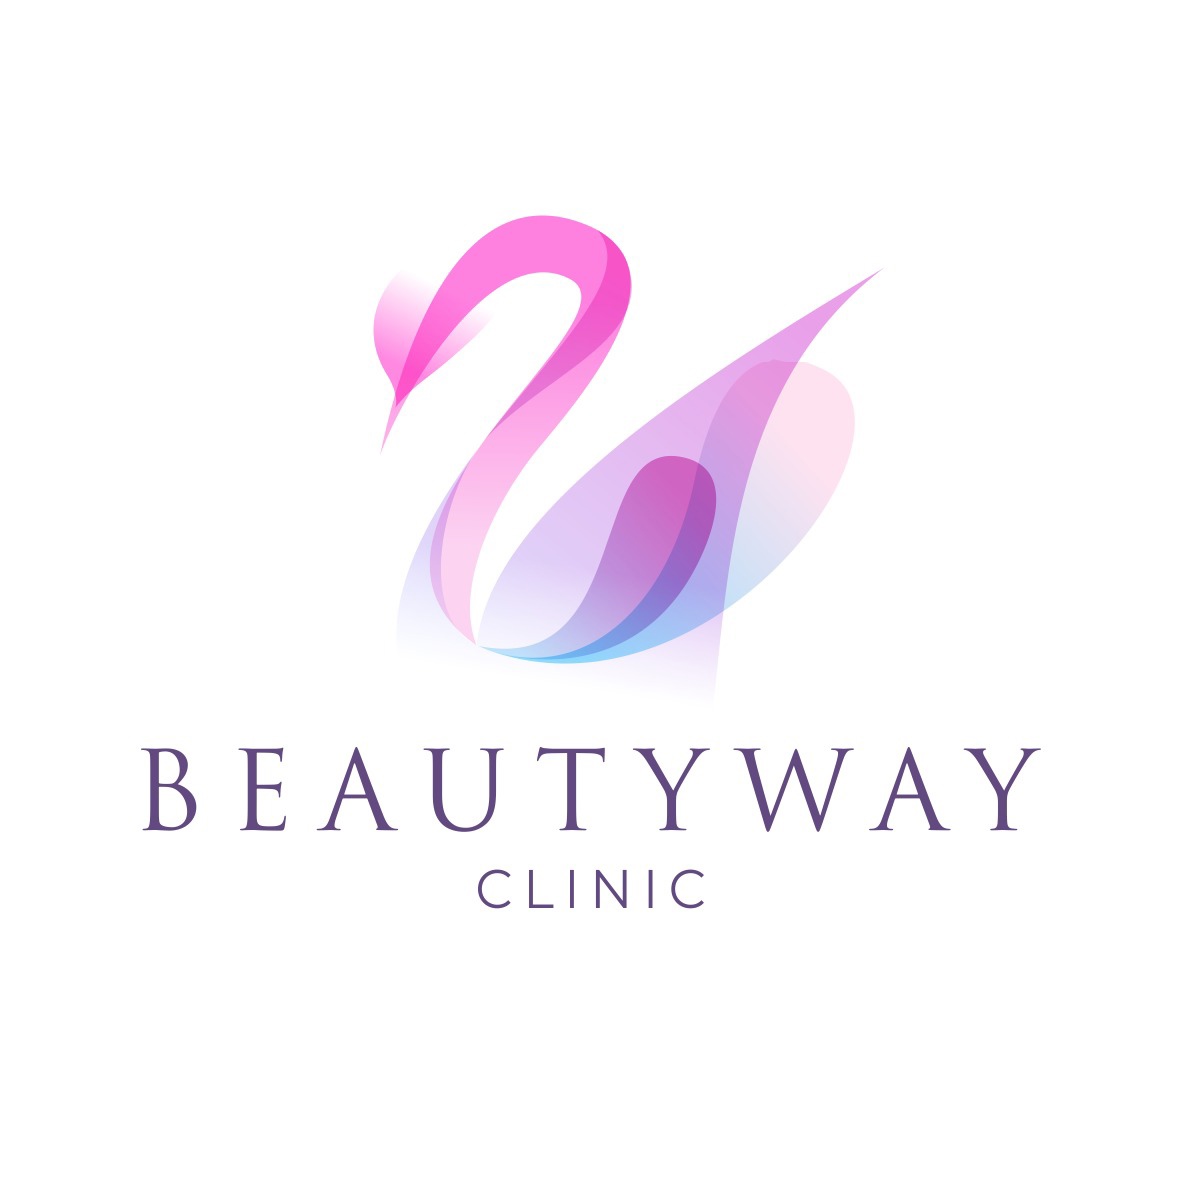 Beautyway Clinic